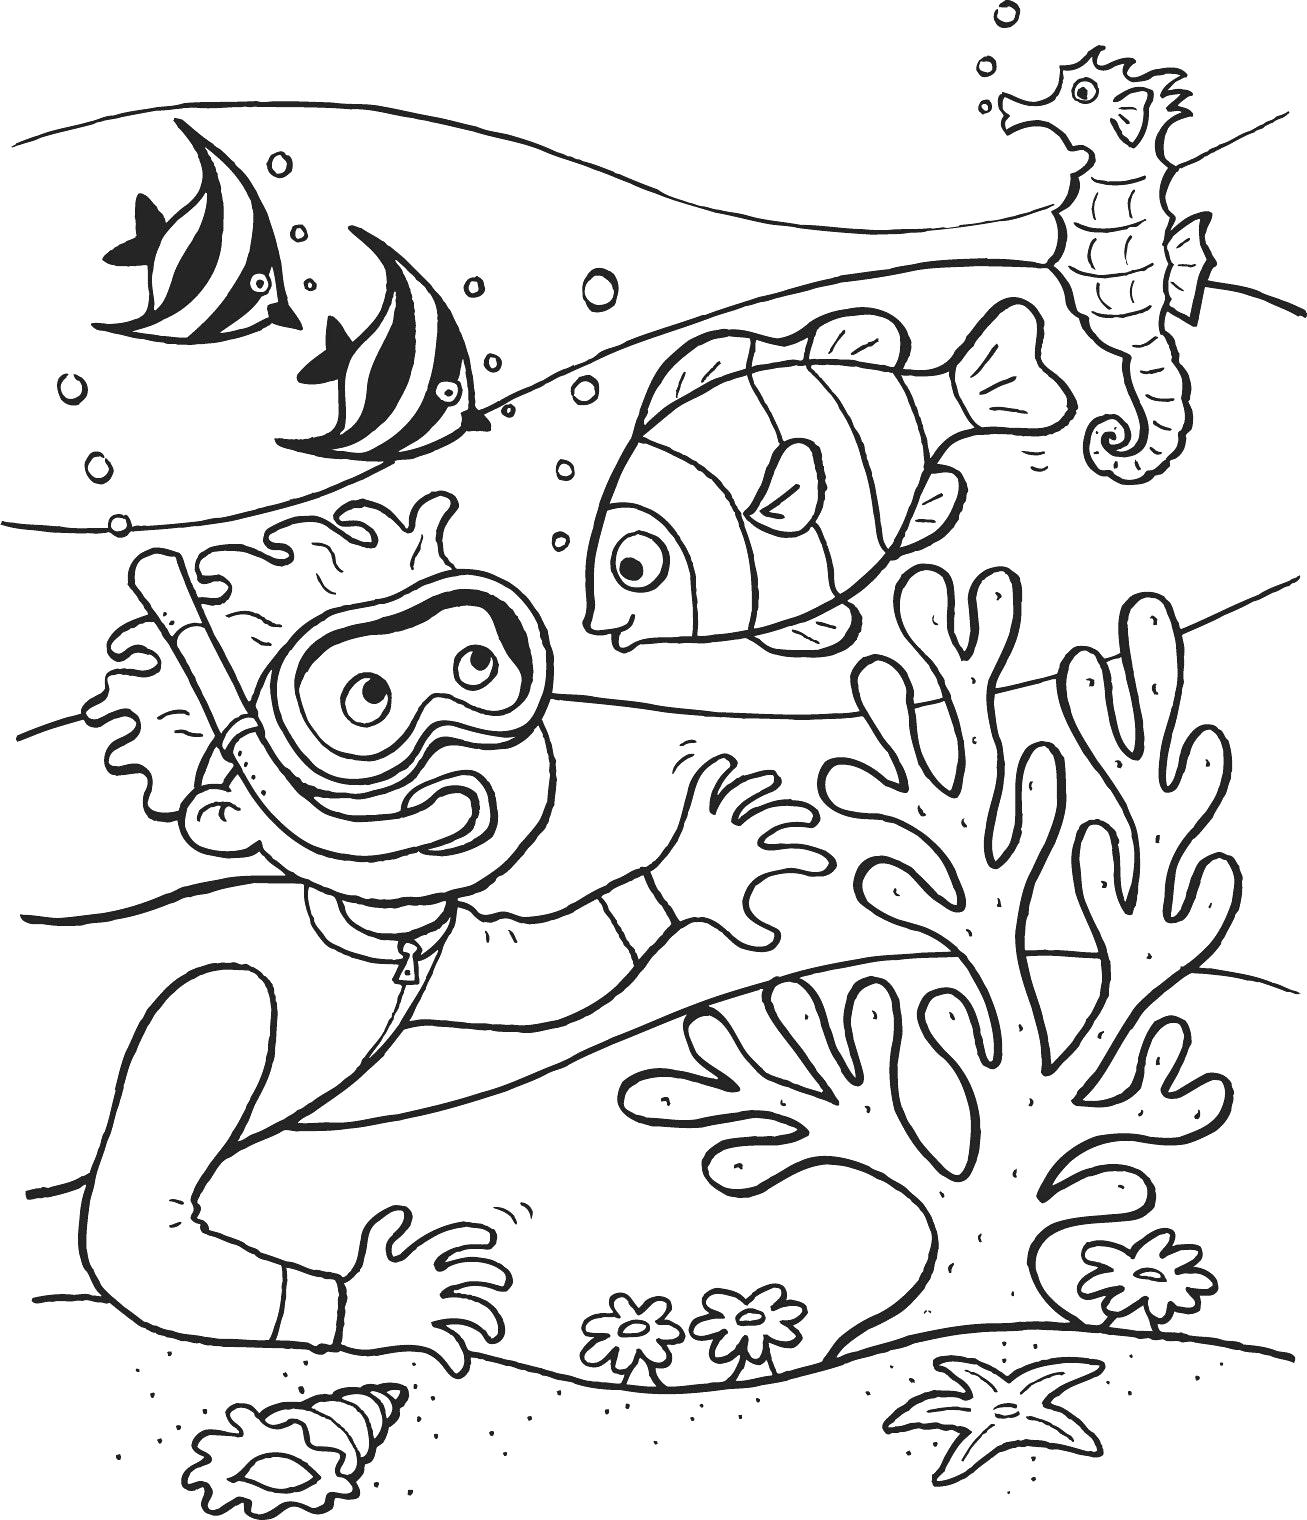 underwater-scene-drawing-at-getdrawings-free-download